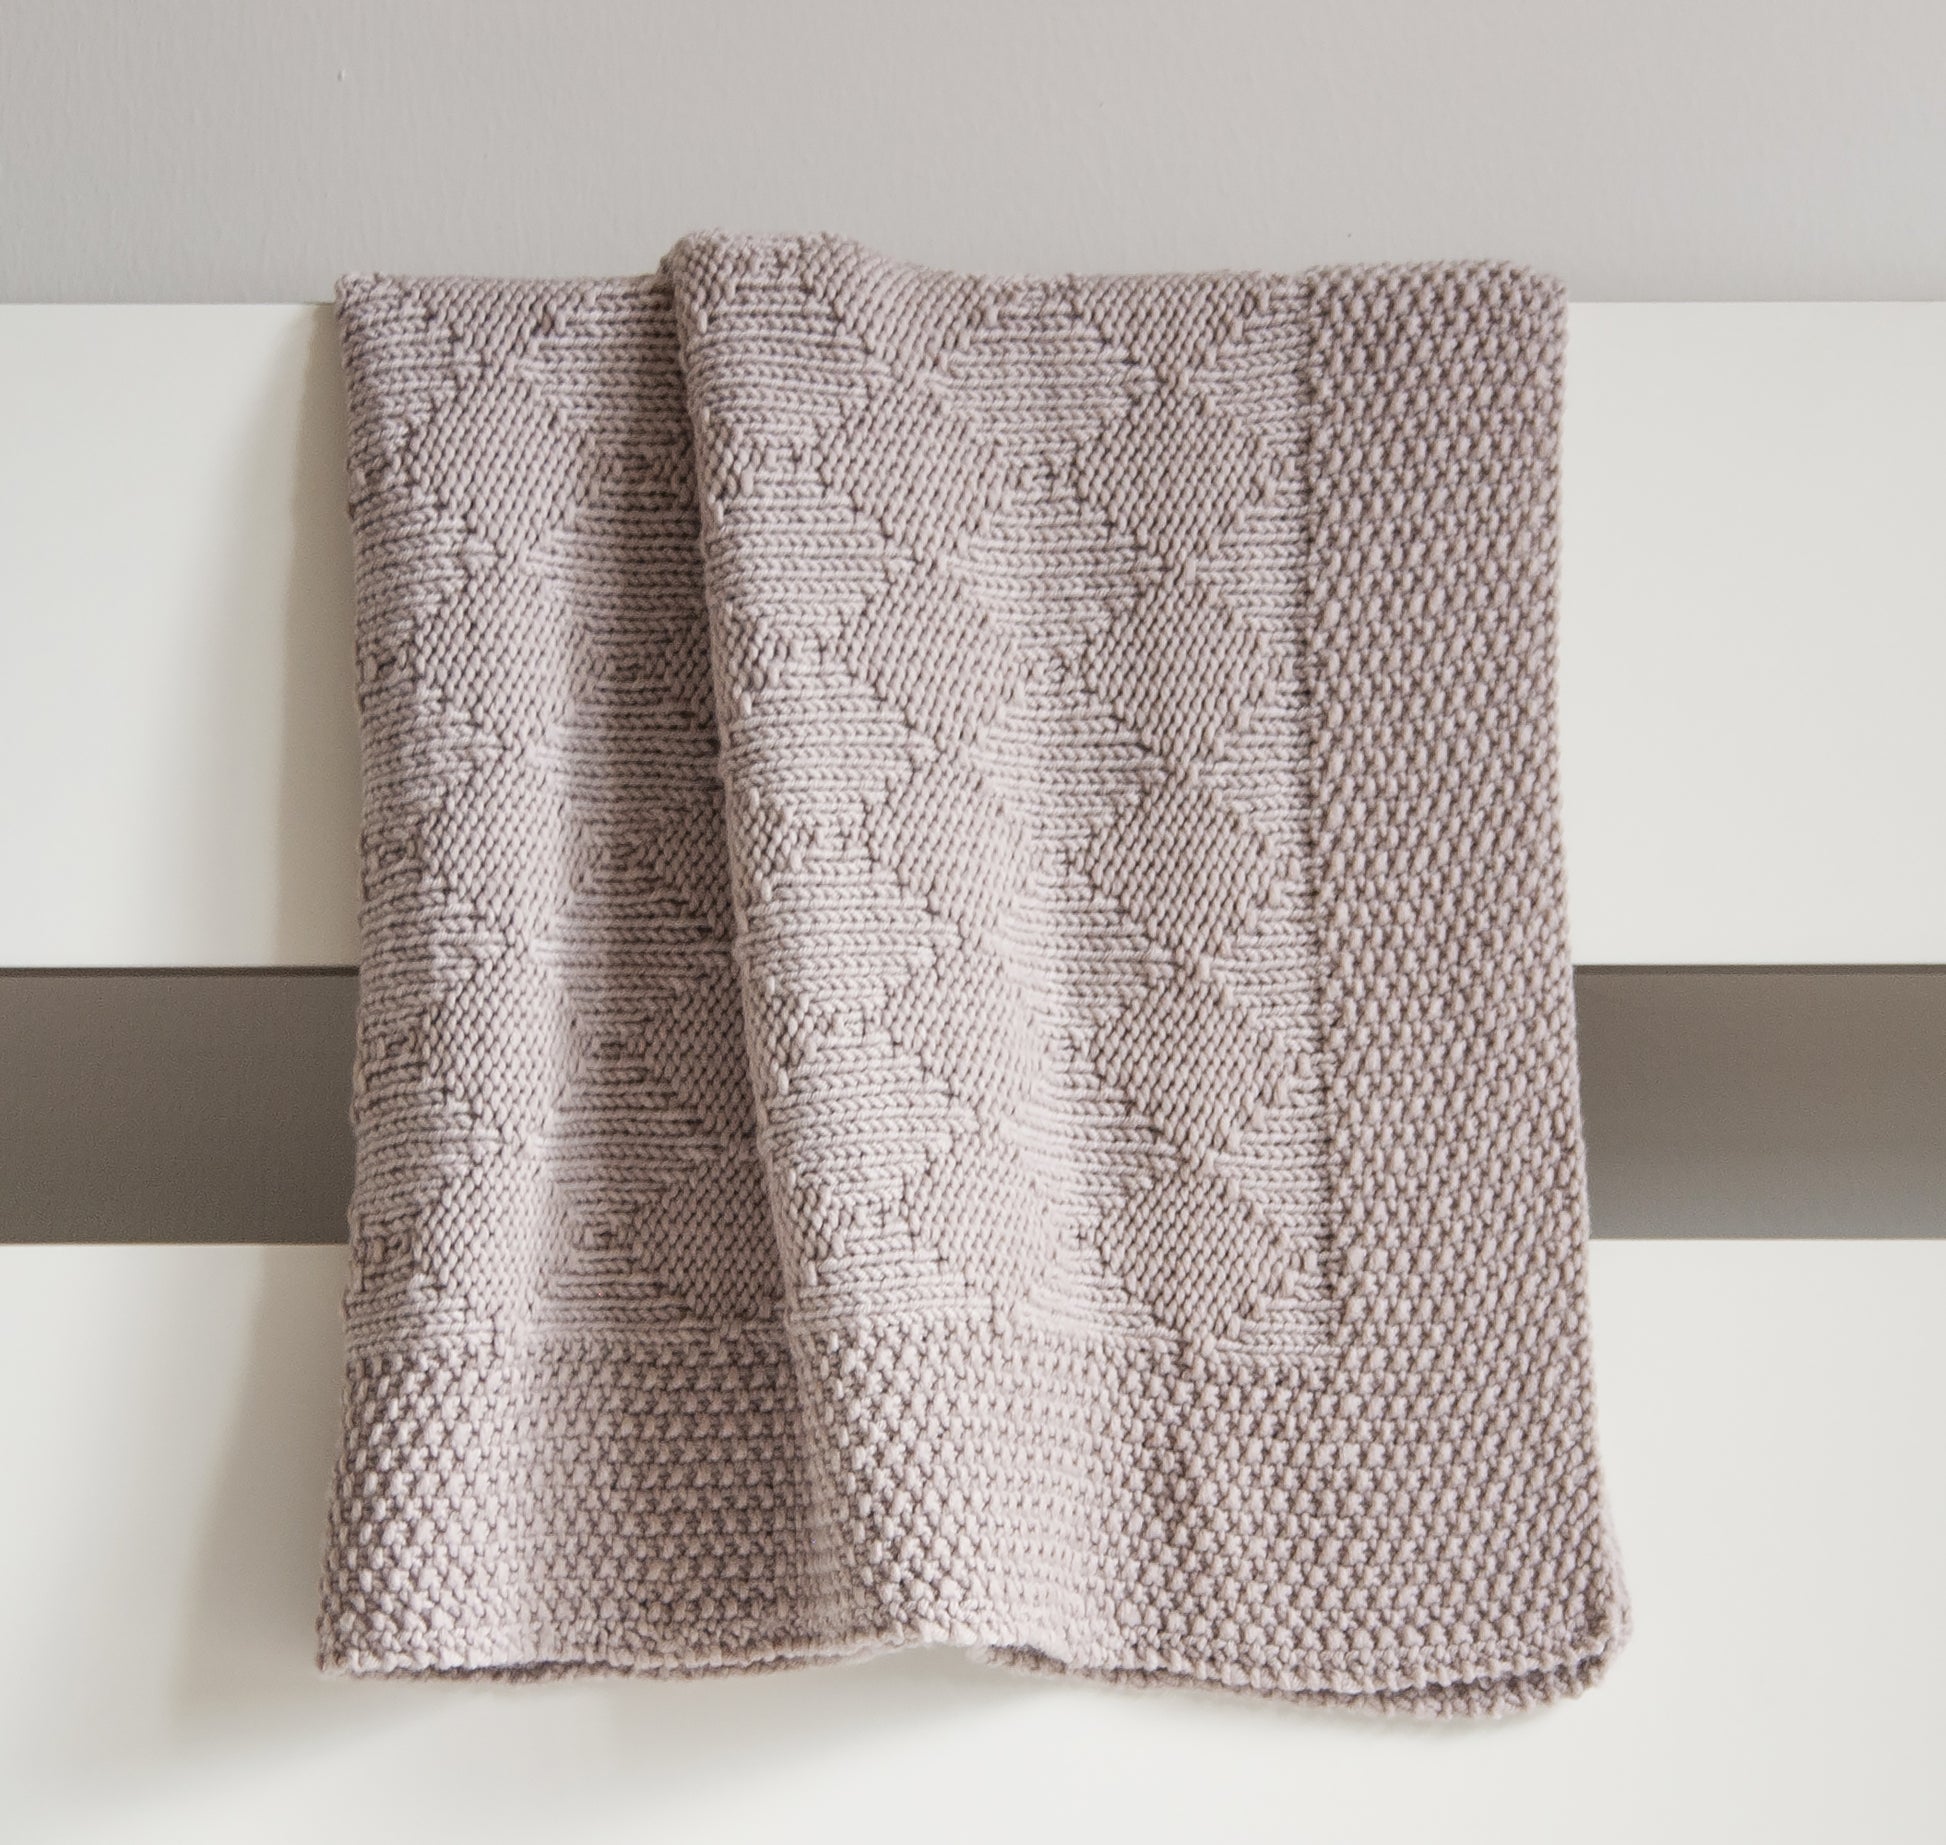 Beige superwash merino wool DK yarn hand-knitted baby blanket in Harlequin knitting pattern